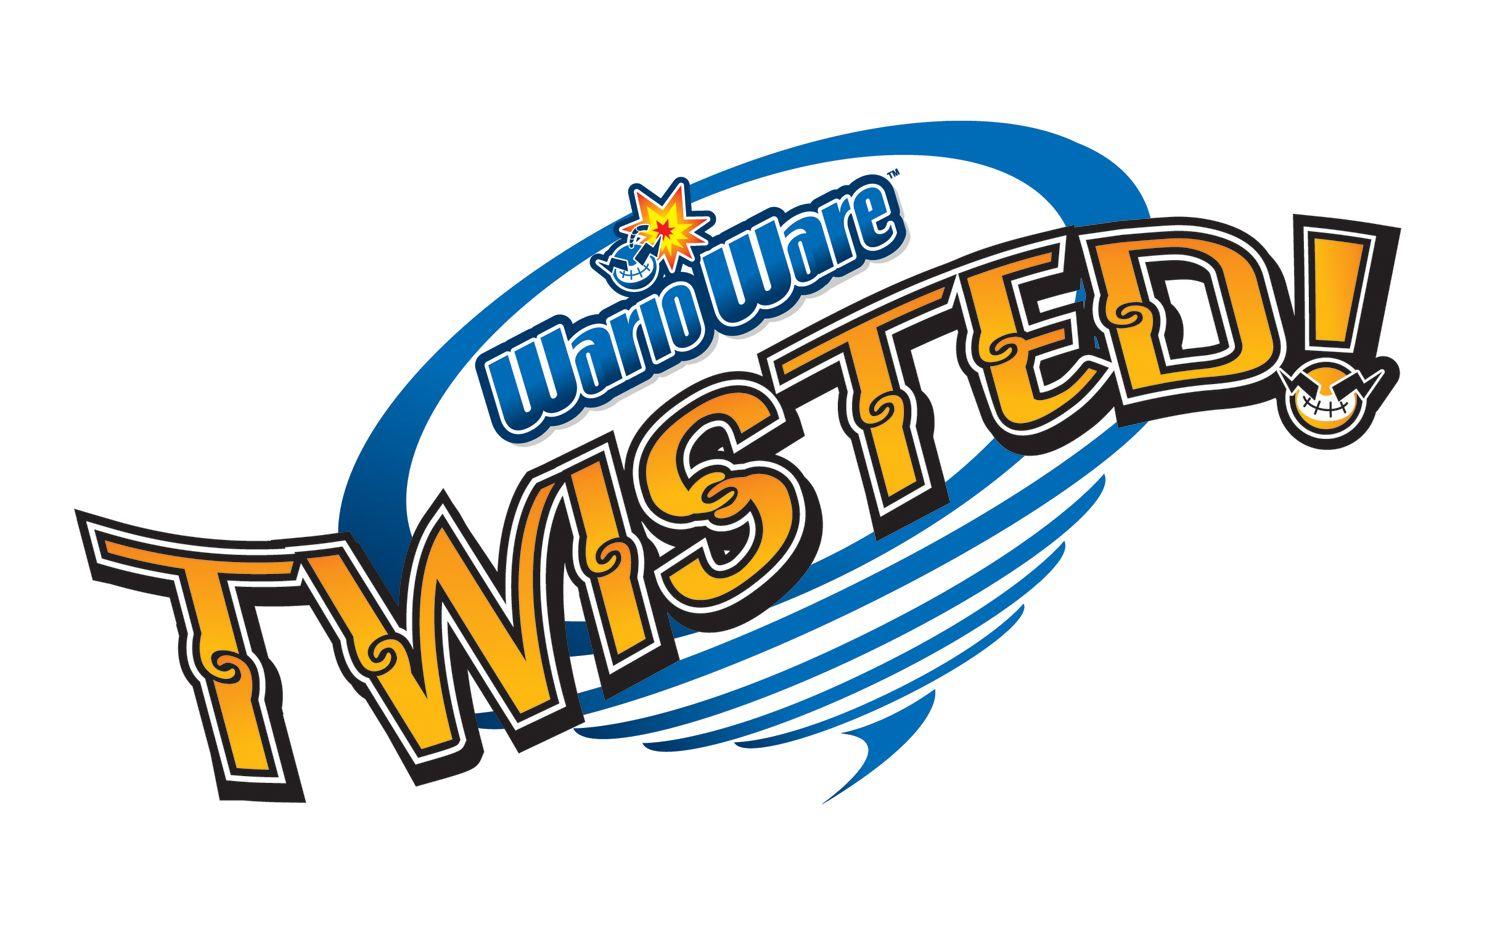 WarioWare Logo - WarioWare: Twisted! (2004) promotional art - MobyGames